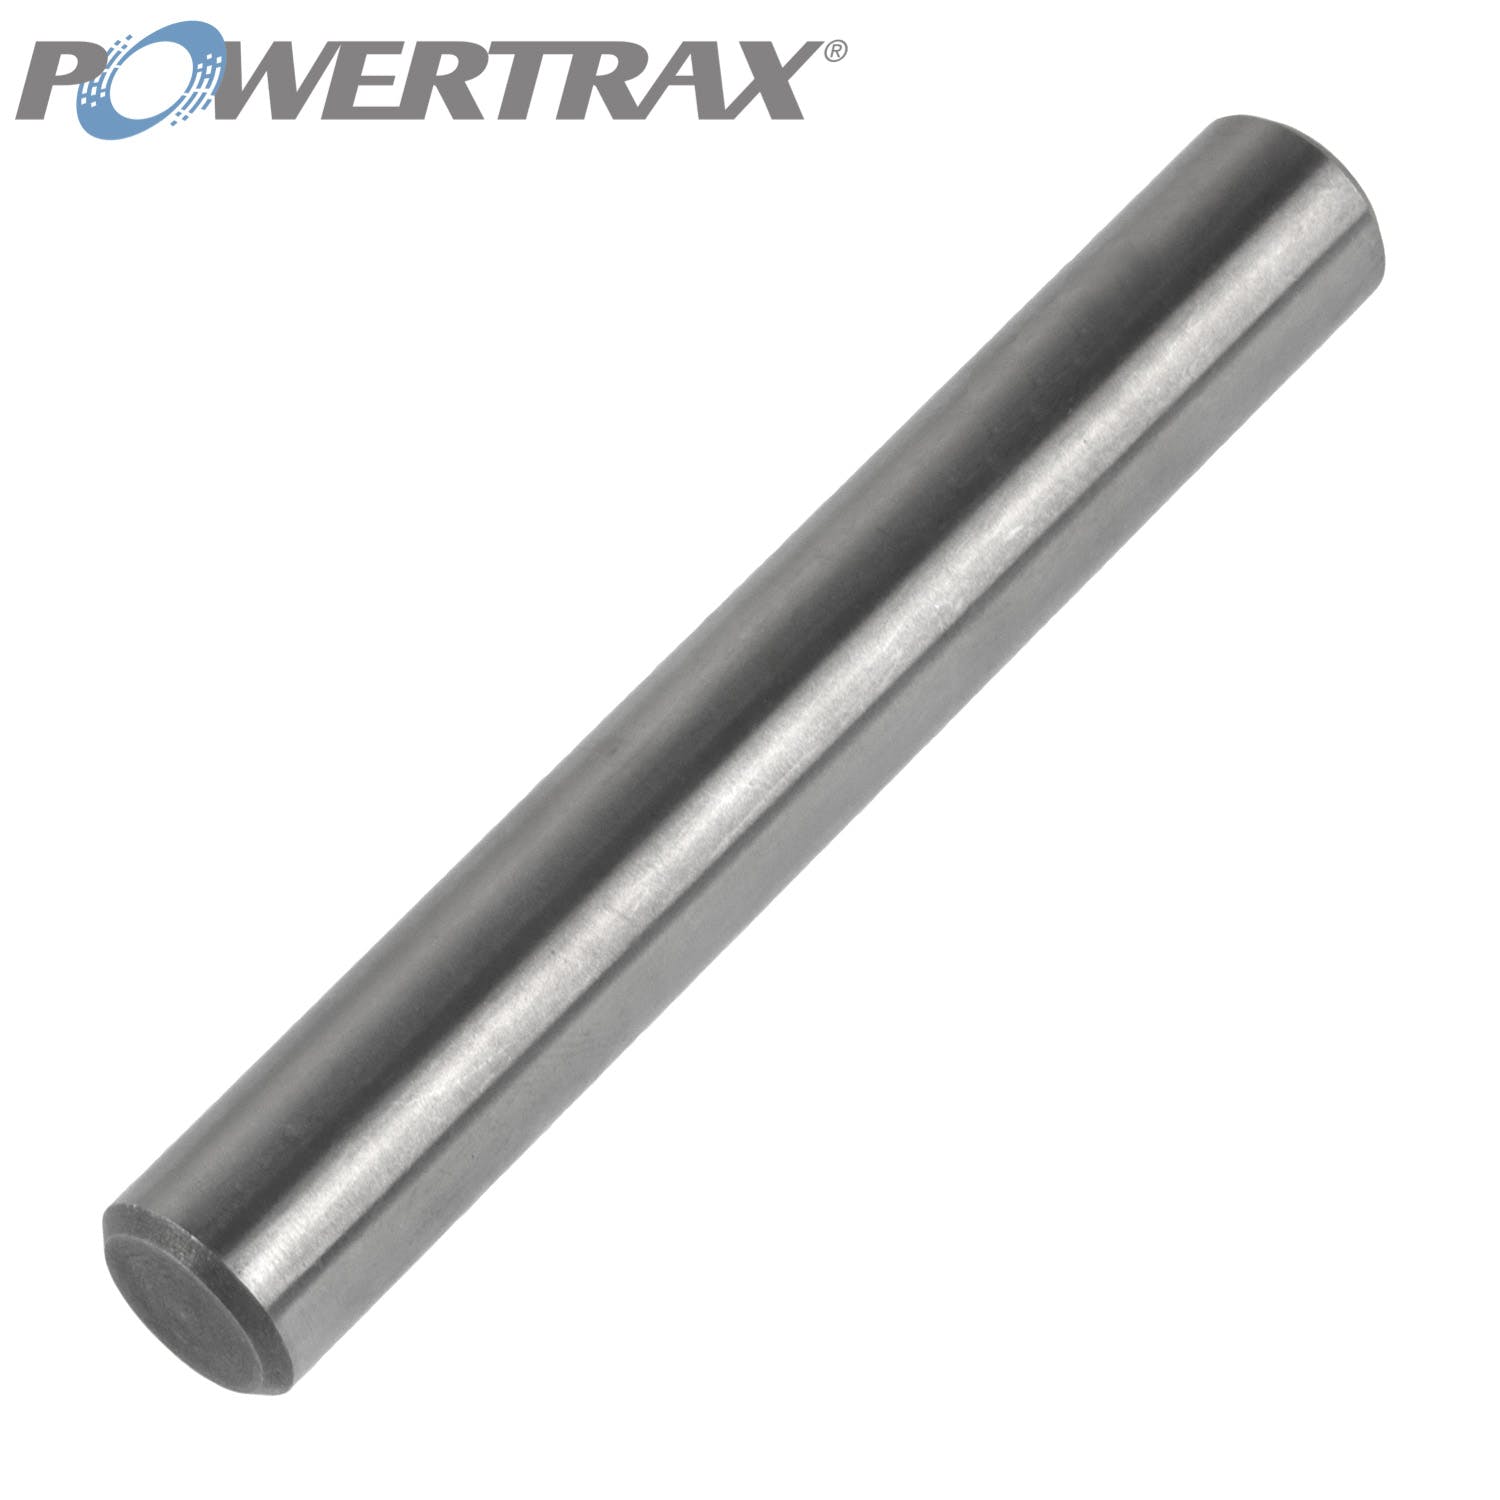 PowerTrax 1510315RAD Differential Pinion Shaft